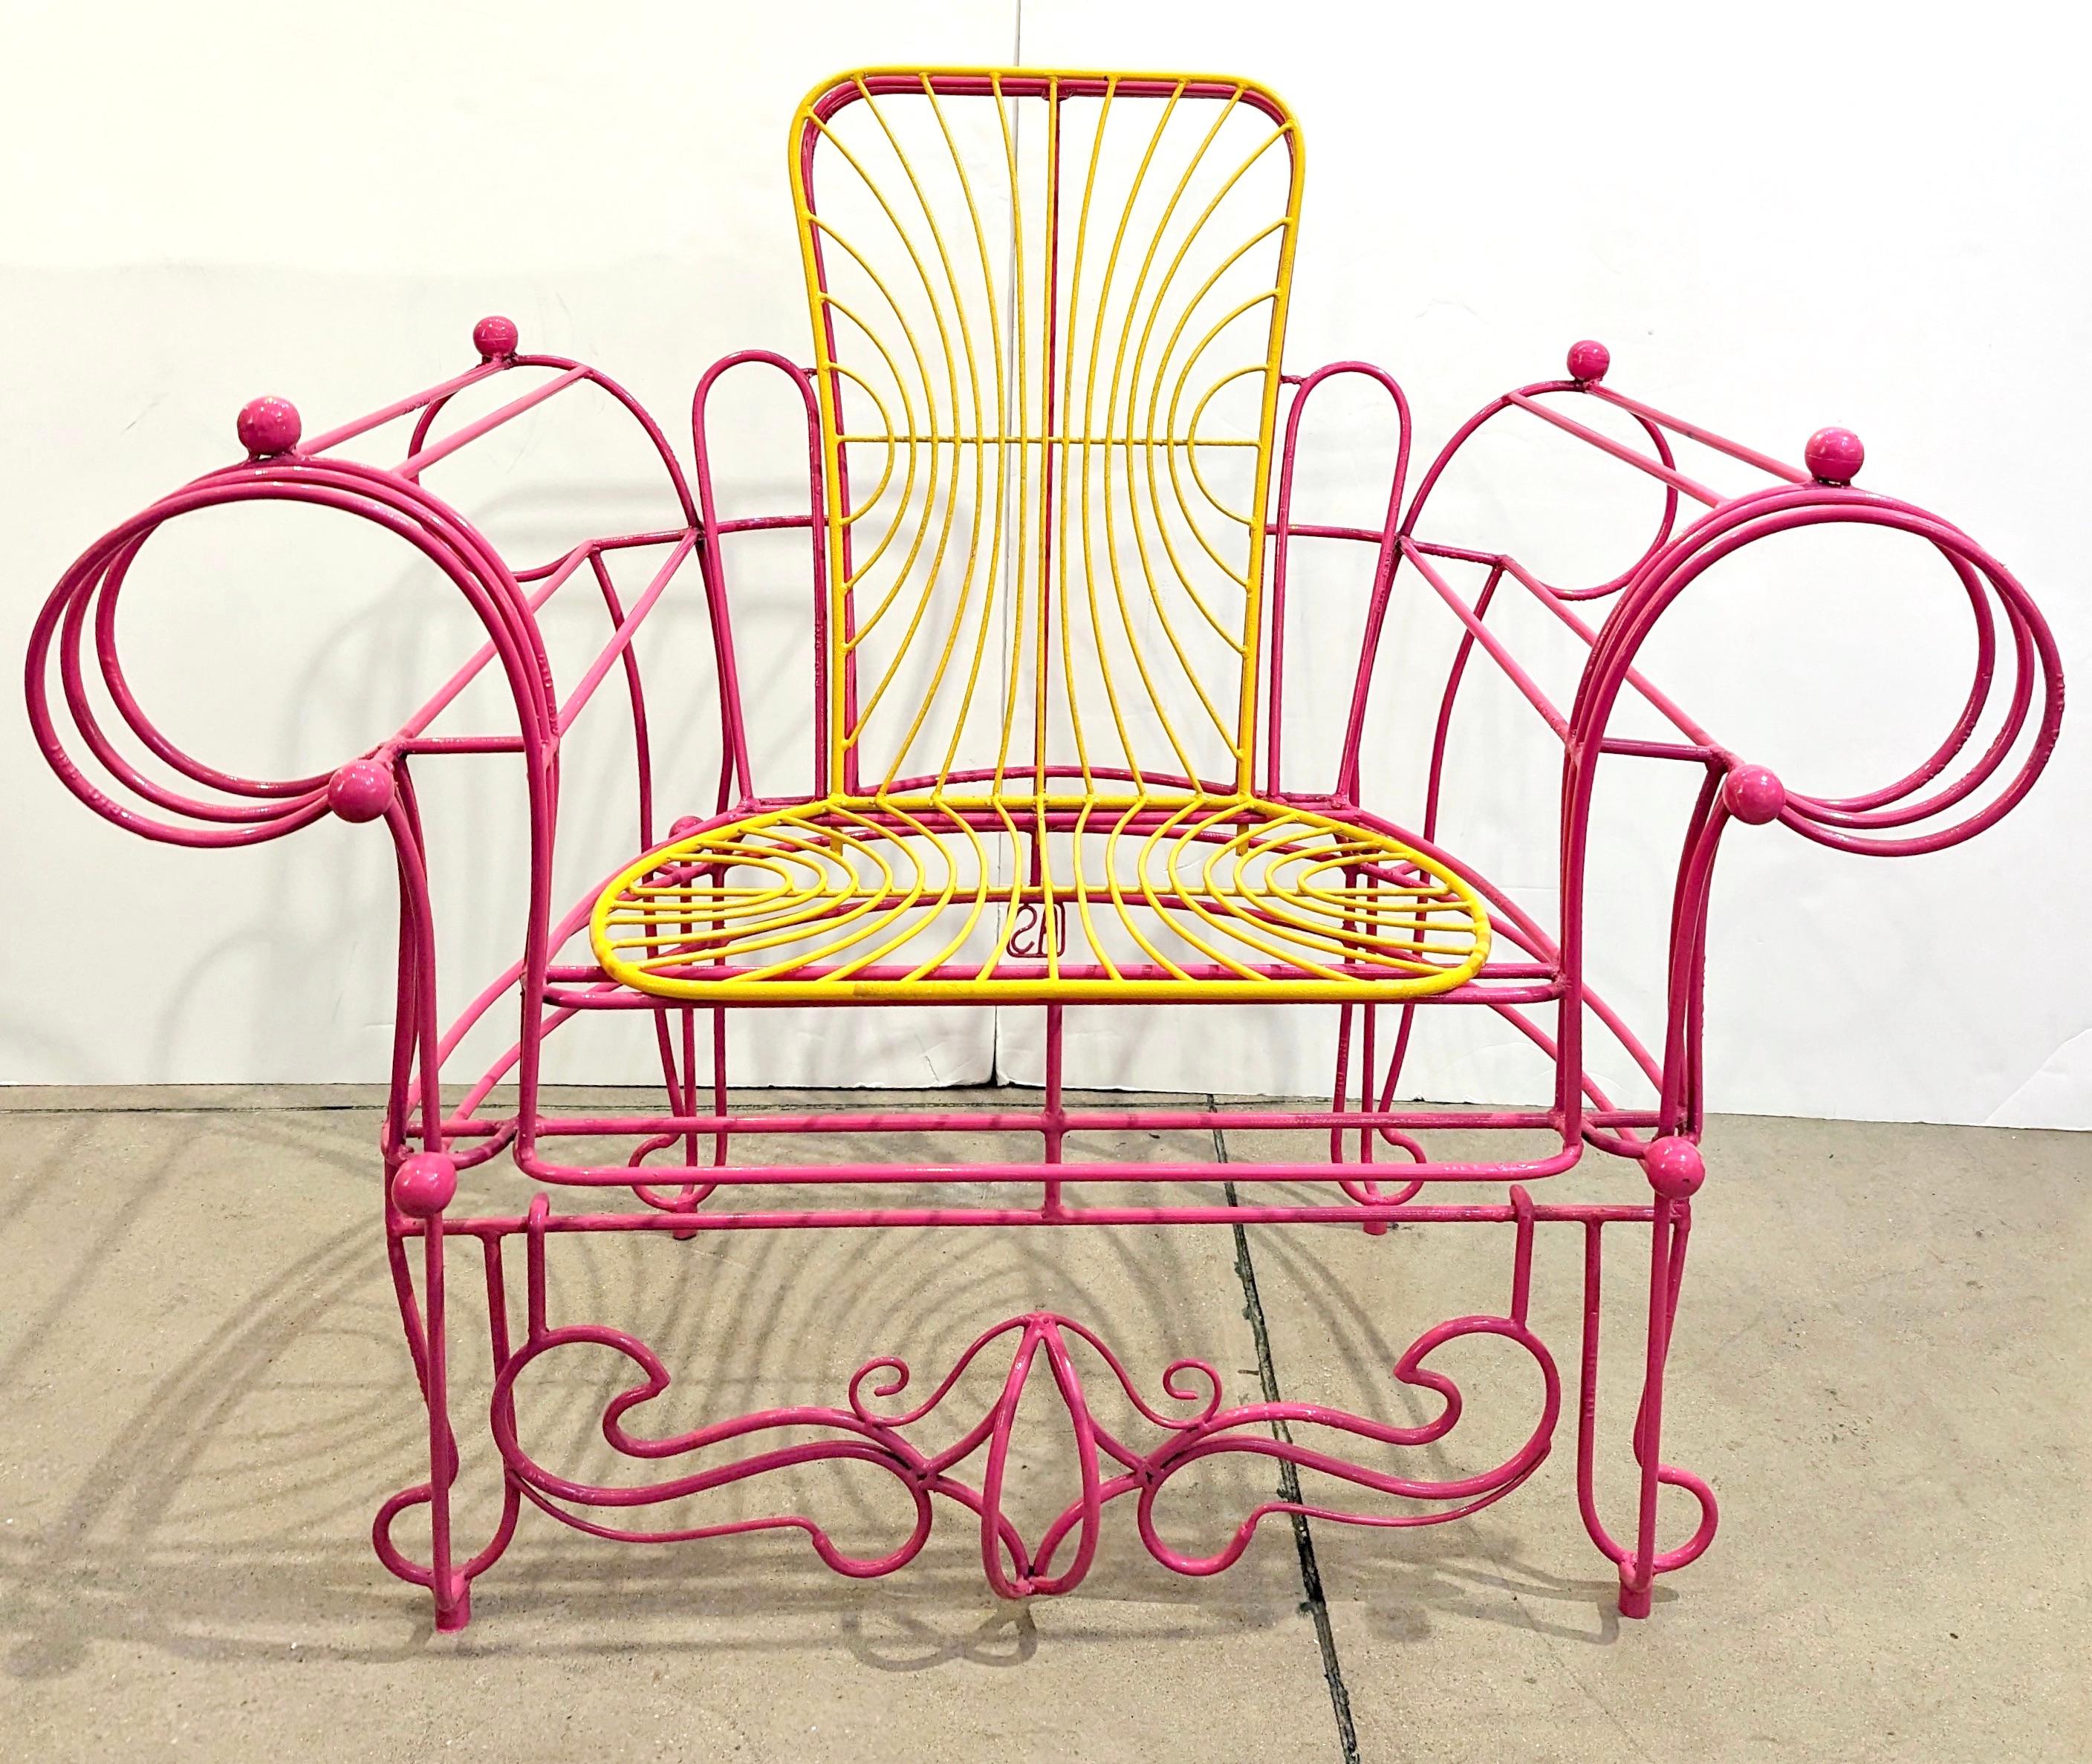 1990s Spazzapan Italian Pop Art Pair of Pink Yellow Metal Armchairs Sculptures For Sale 8